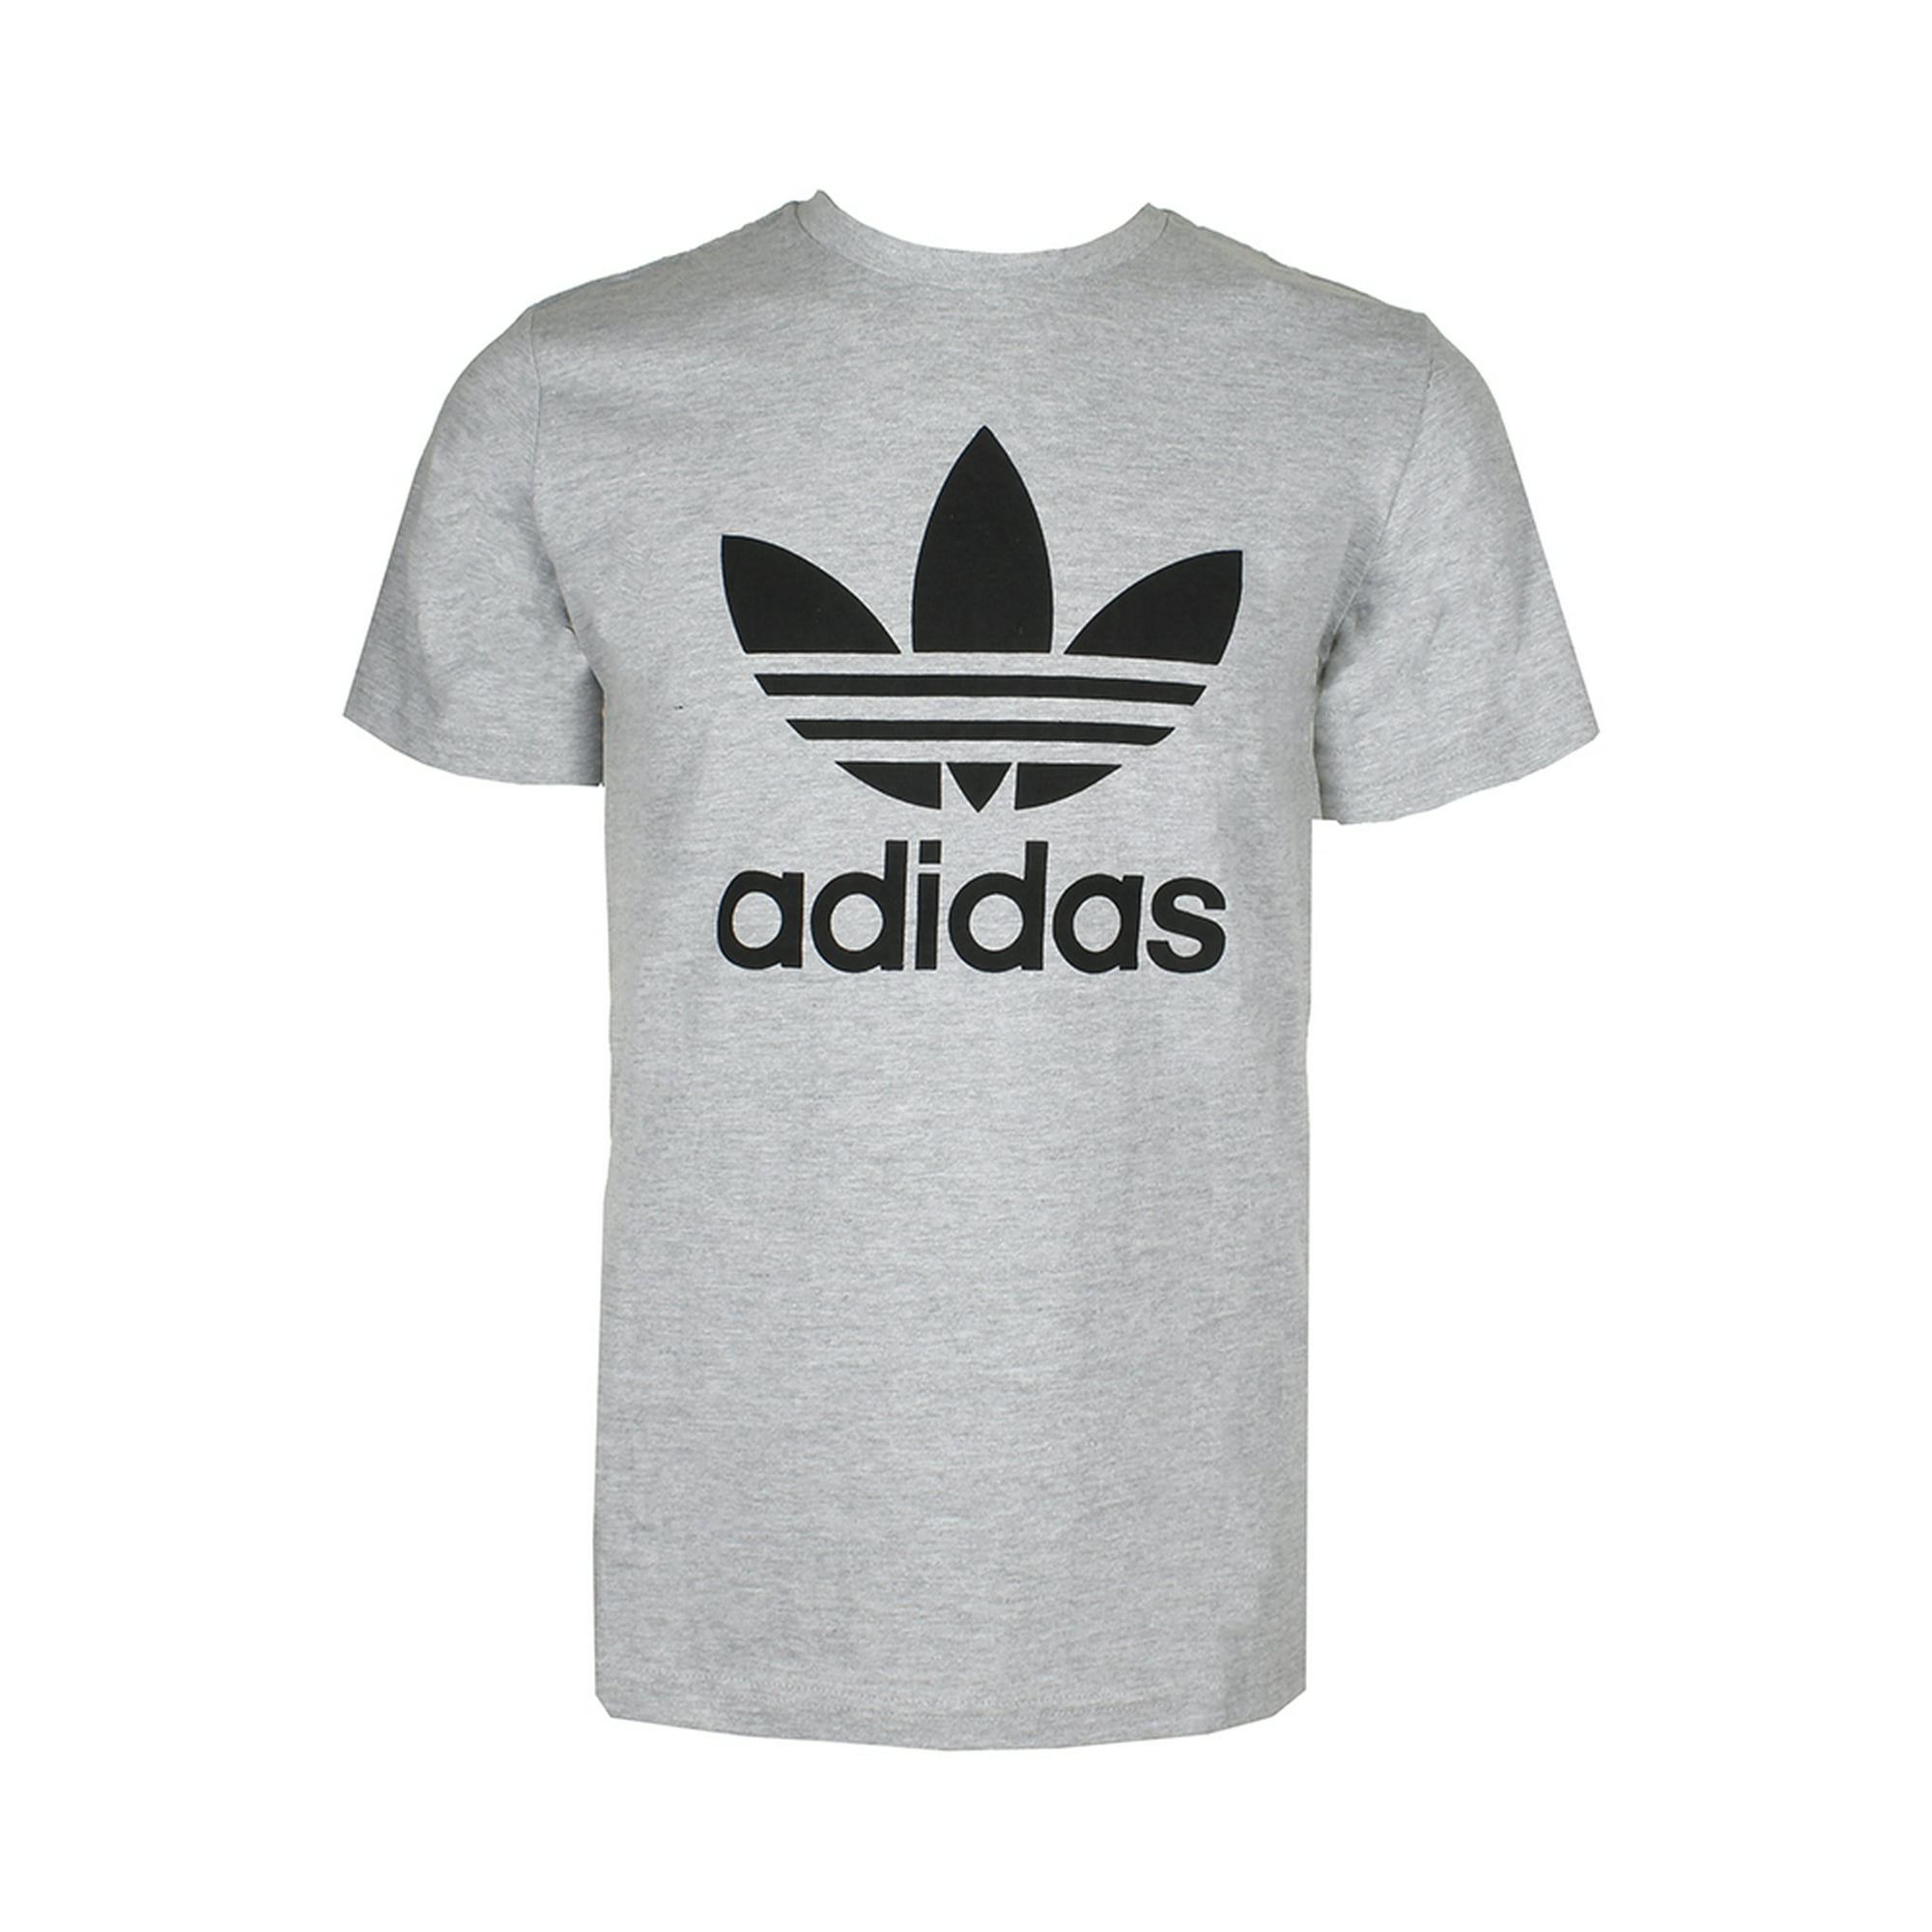 Adidas Men's Shirt - White - L